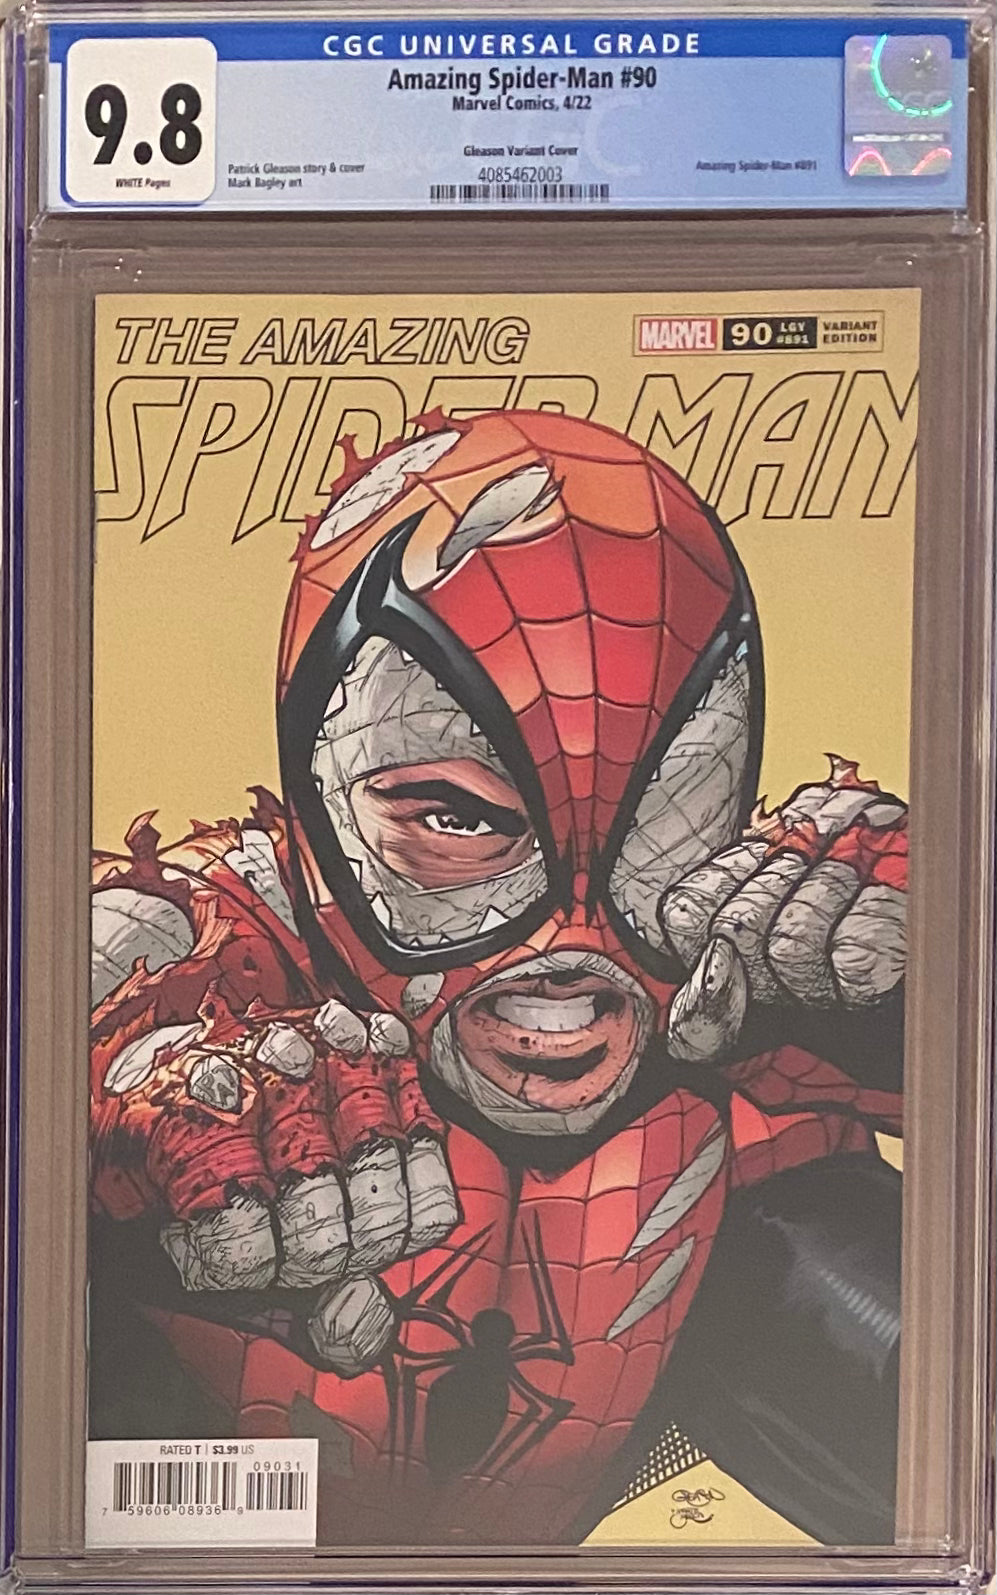 Amazing Spider-Man #90 Gleason 1:25 Retailer Incentive Variant CGC 9.8